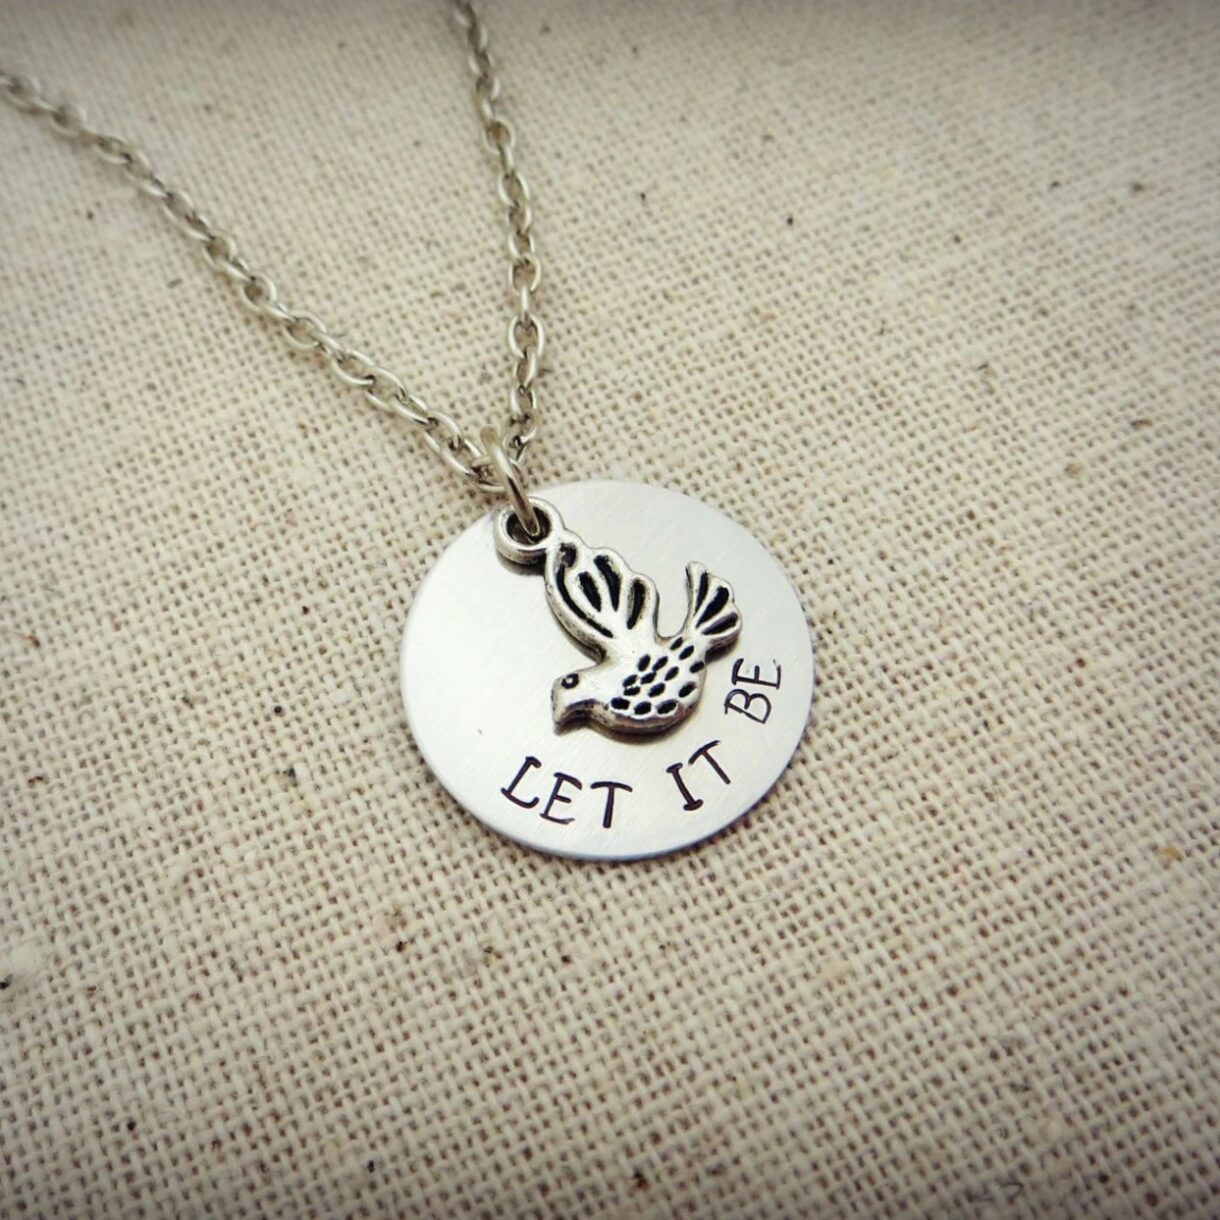 let it be necklace - Pelavida - Shop For Life